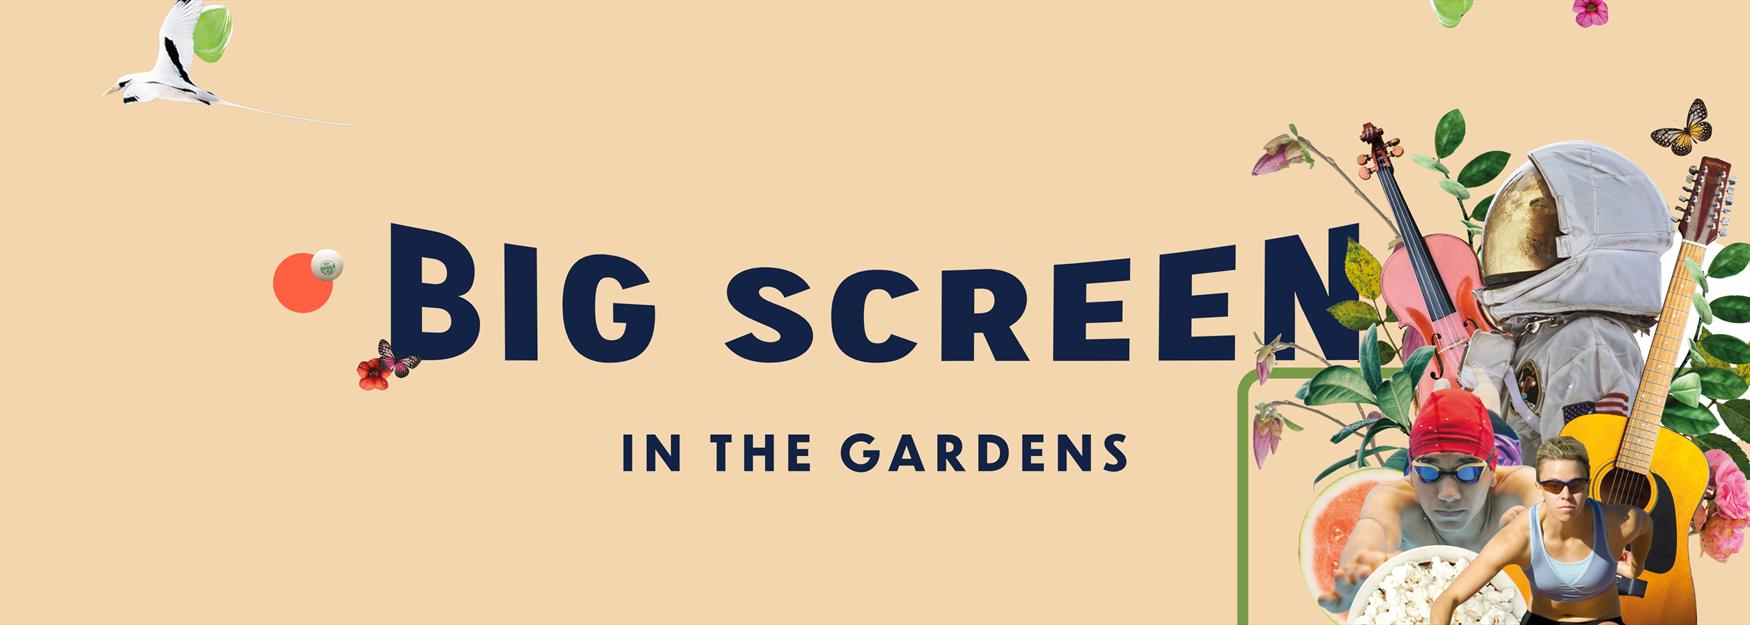 Big Screen in the Gardens, Imperial Gardens, Cheltenham